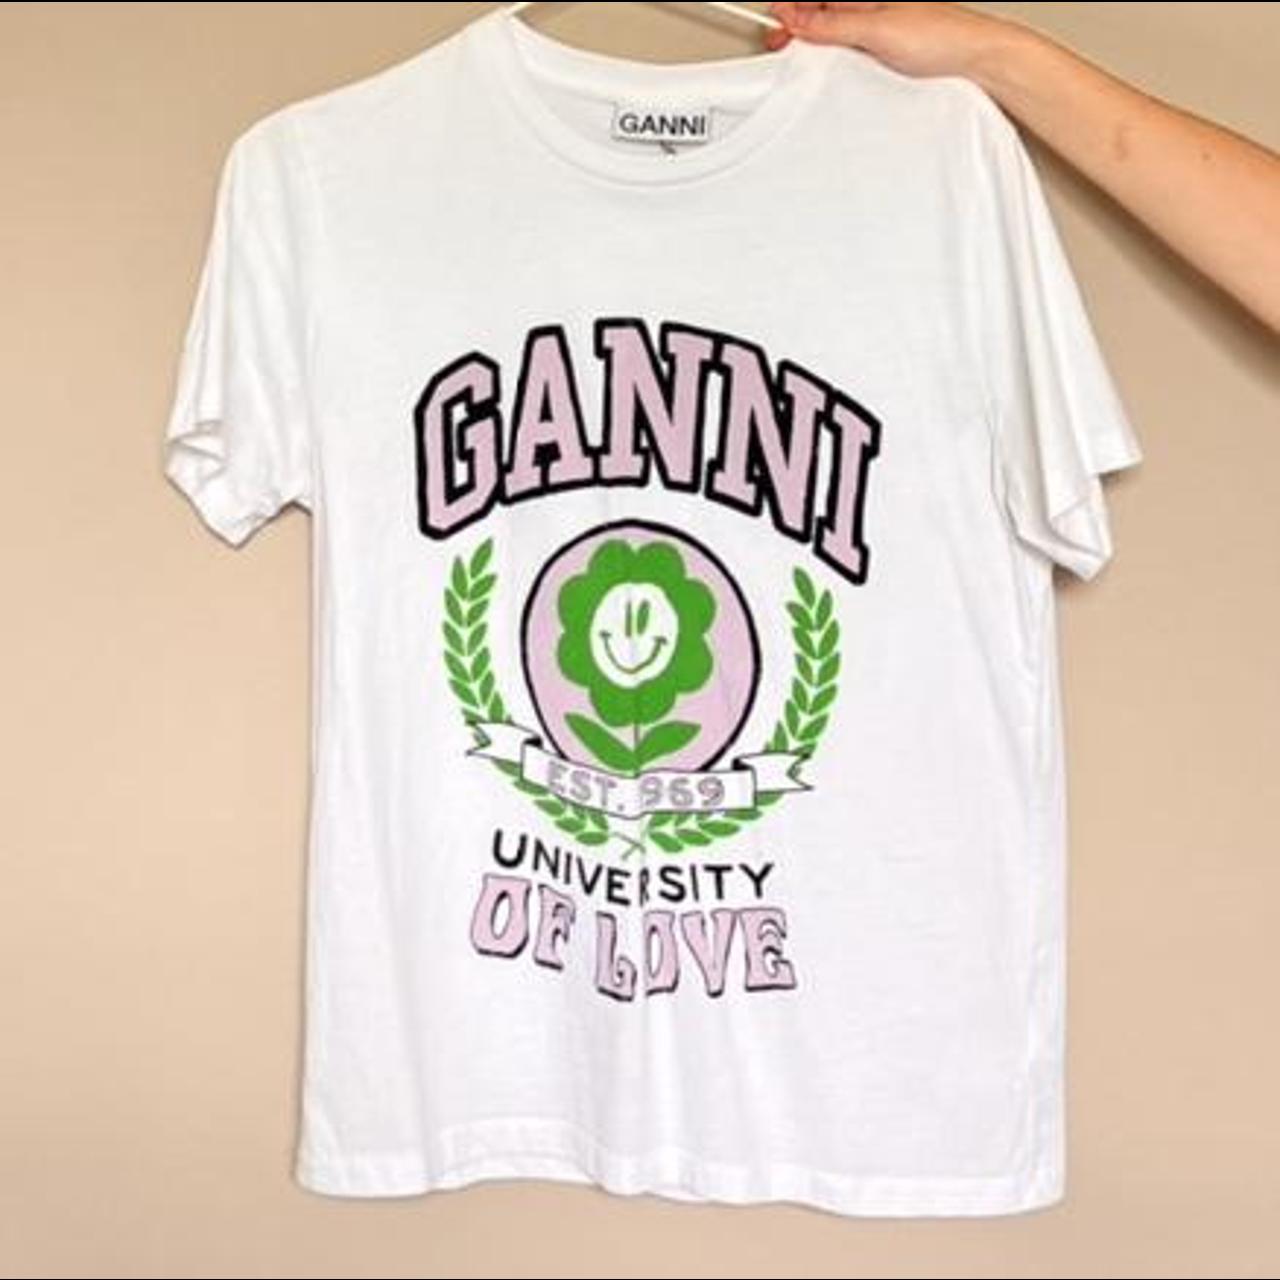 Ganni Women's Shirt (2)